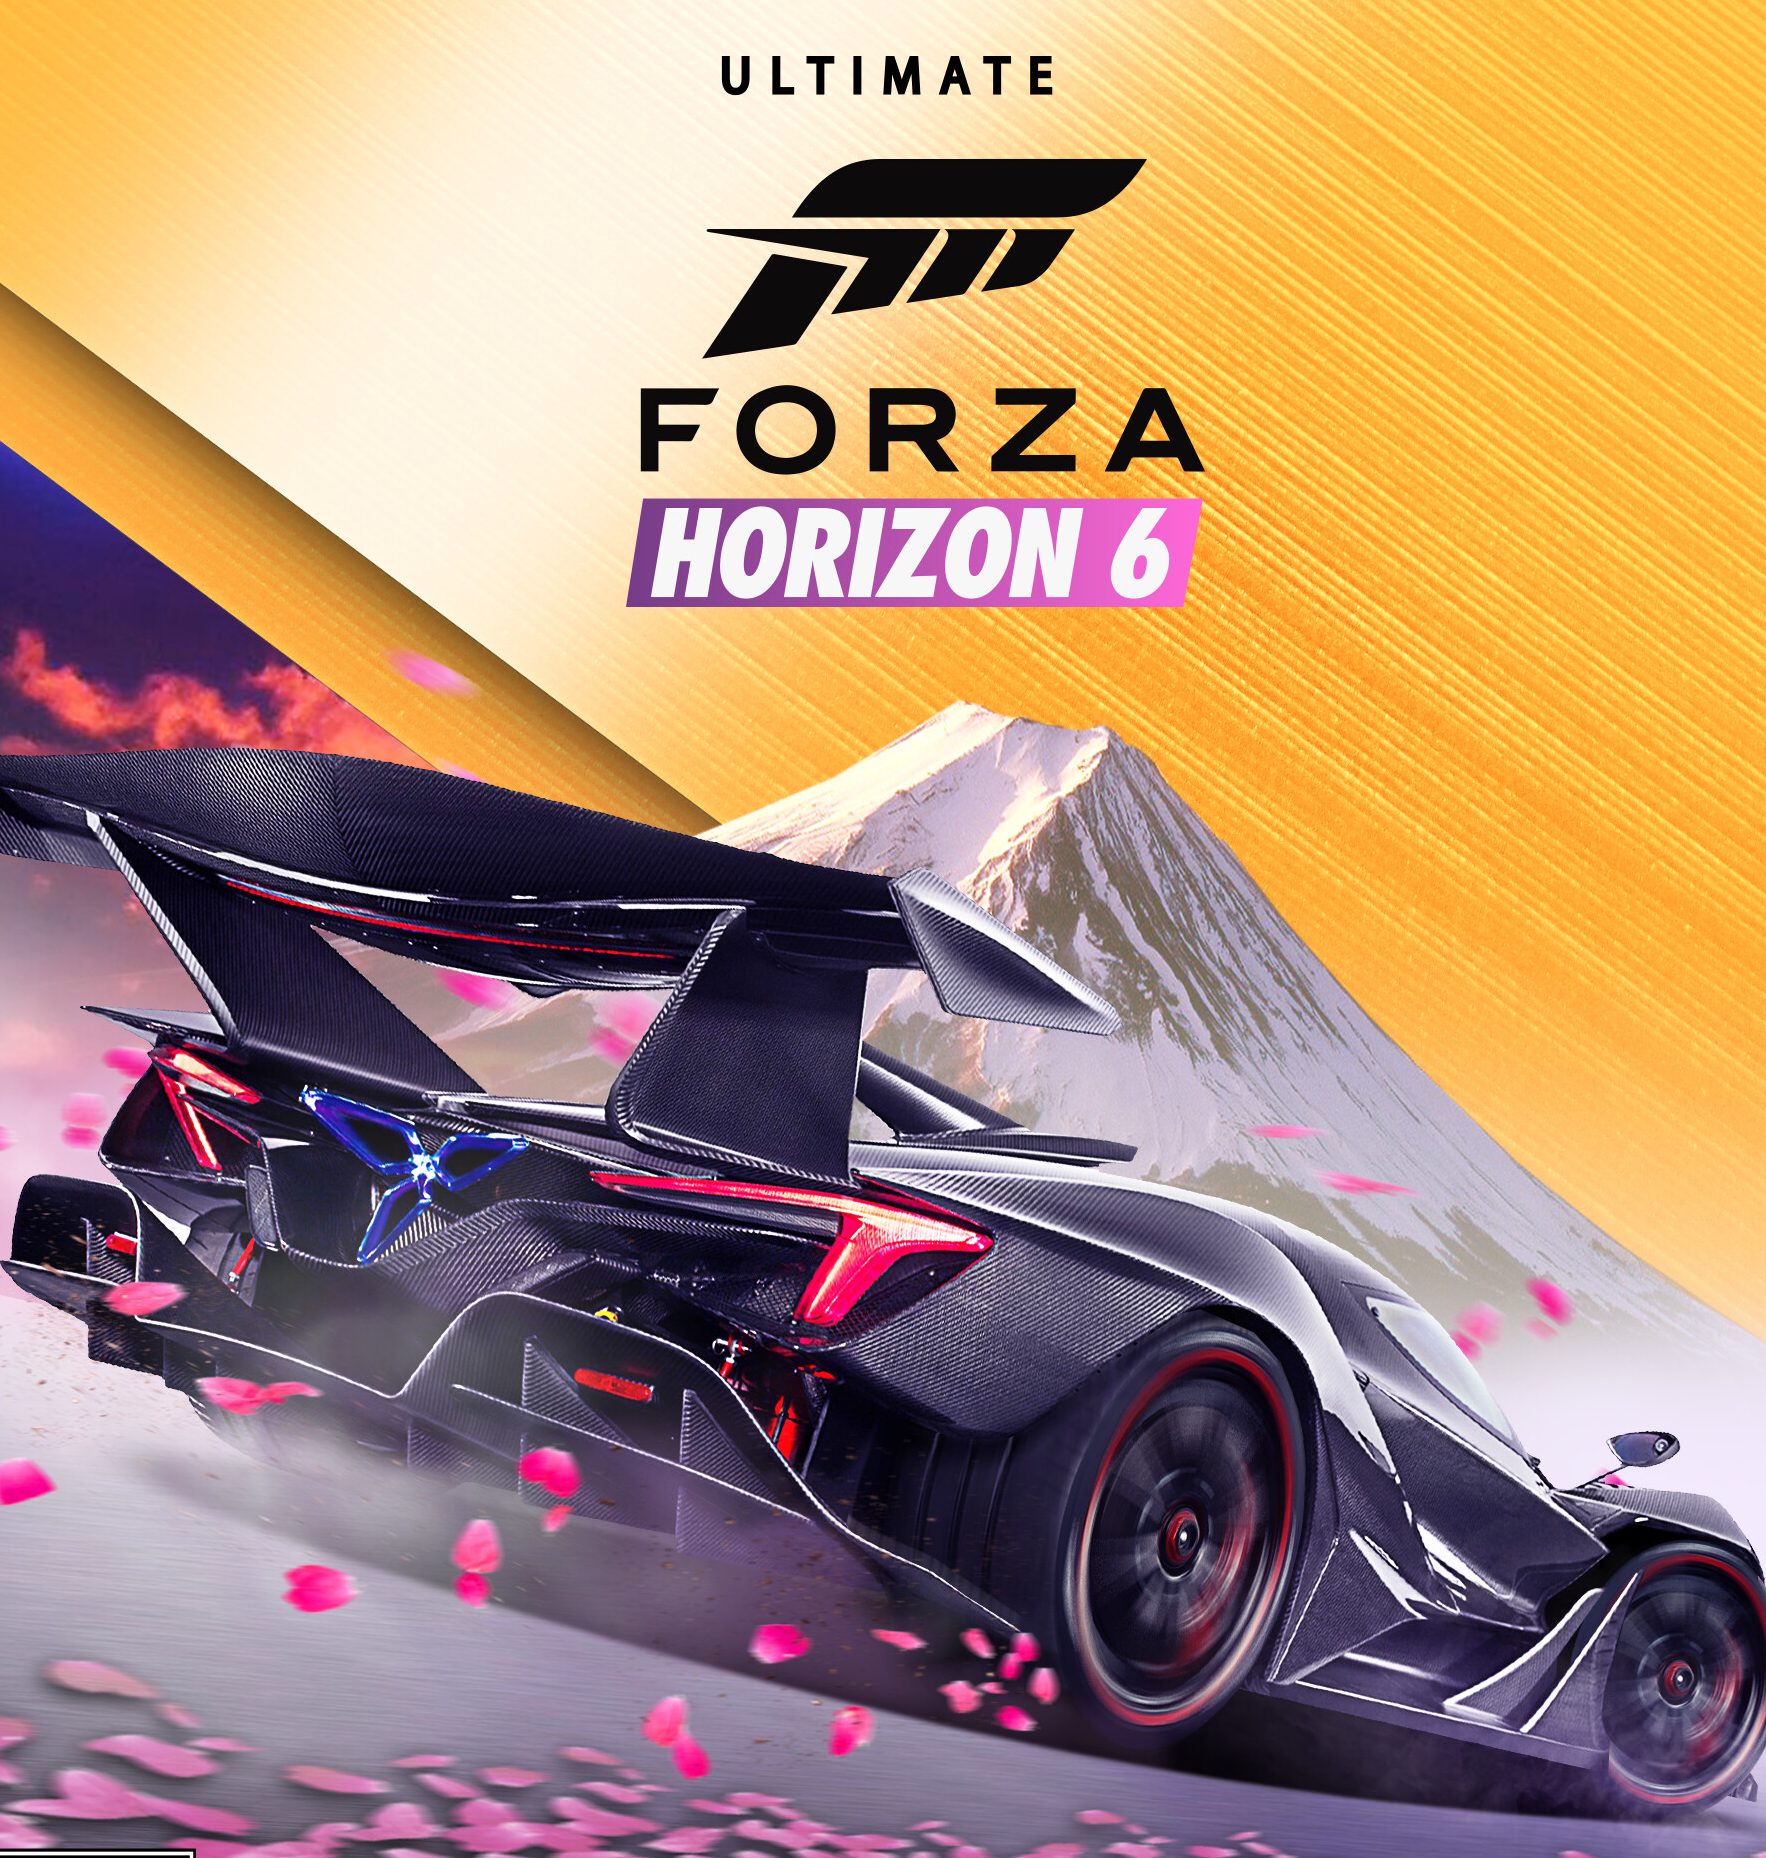 When will Forza Horizon 6 release?